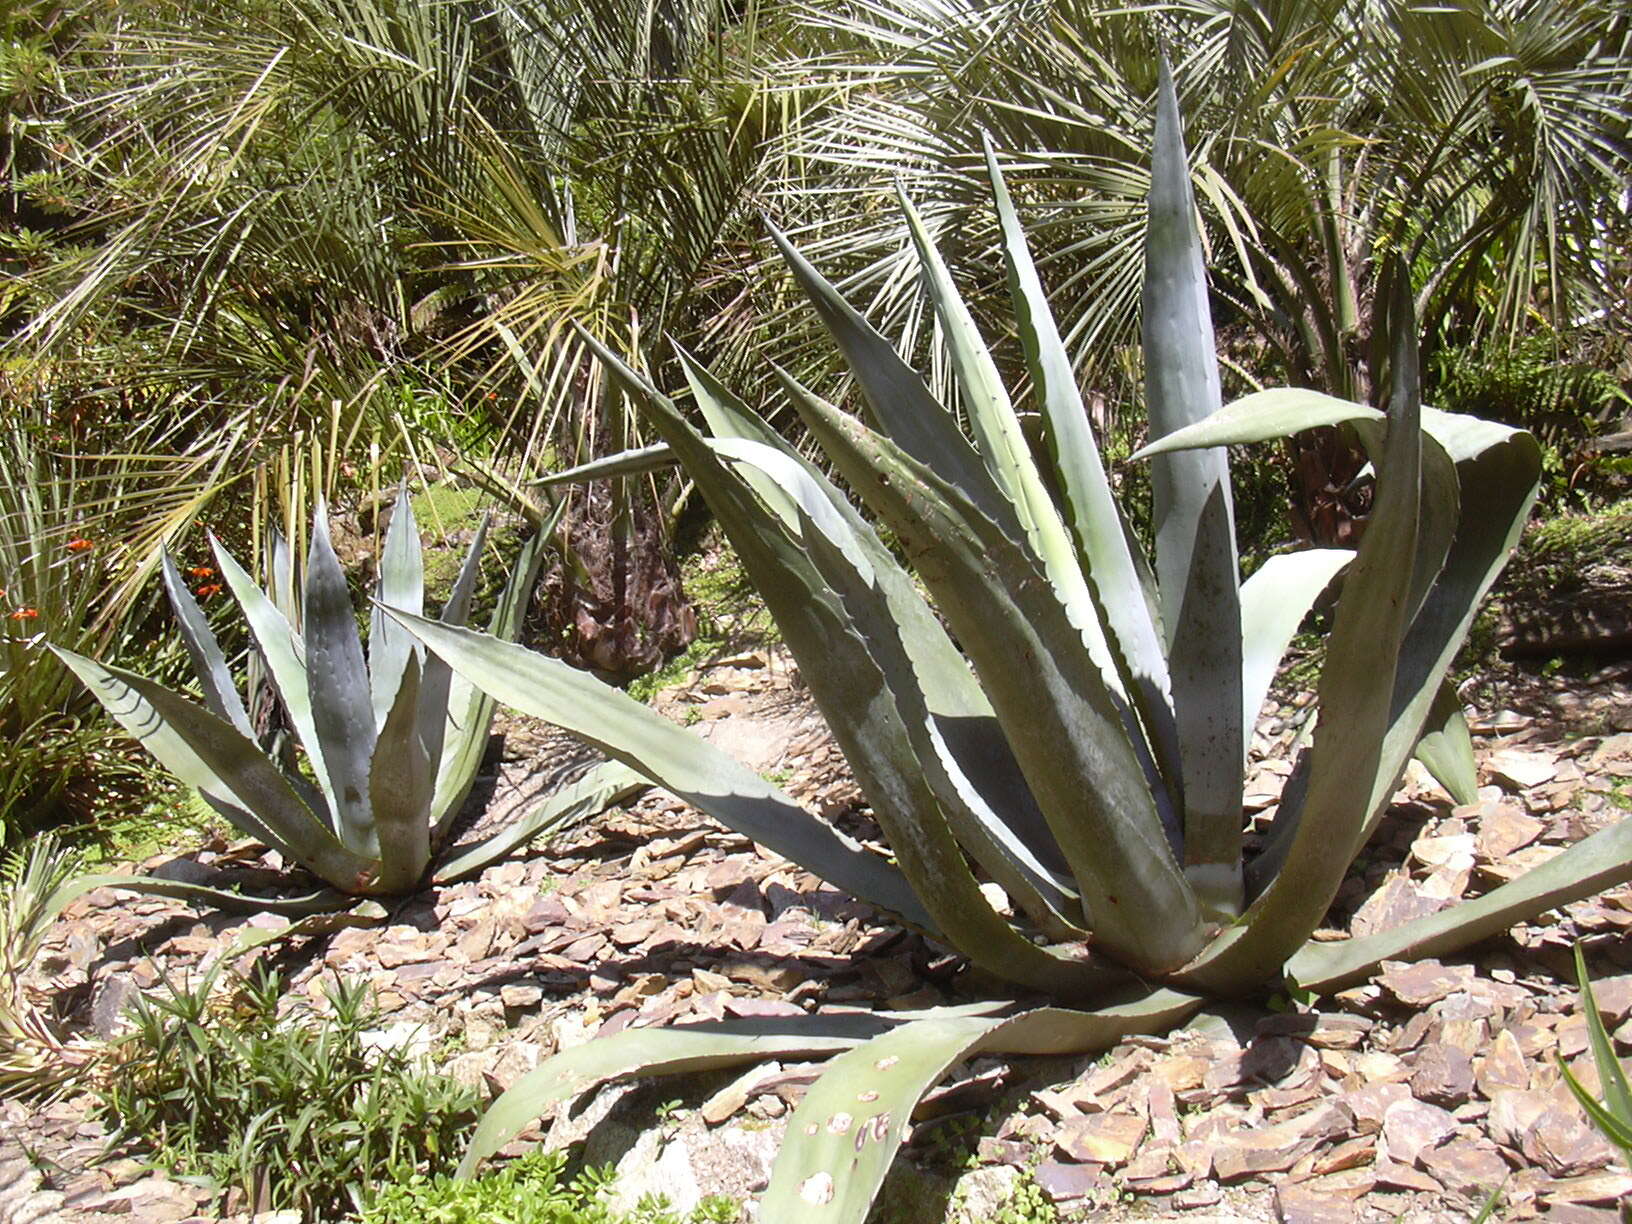 Image of American Aloe